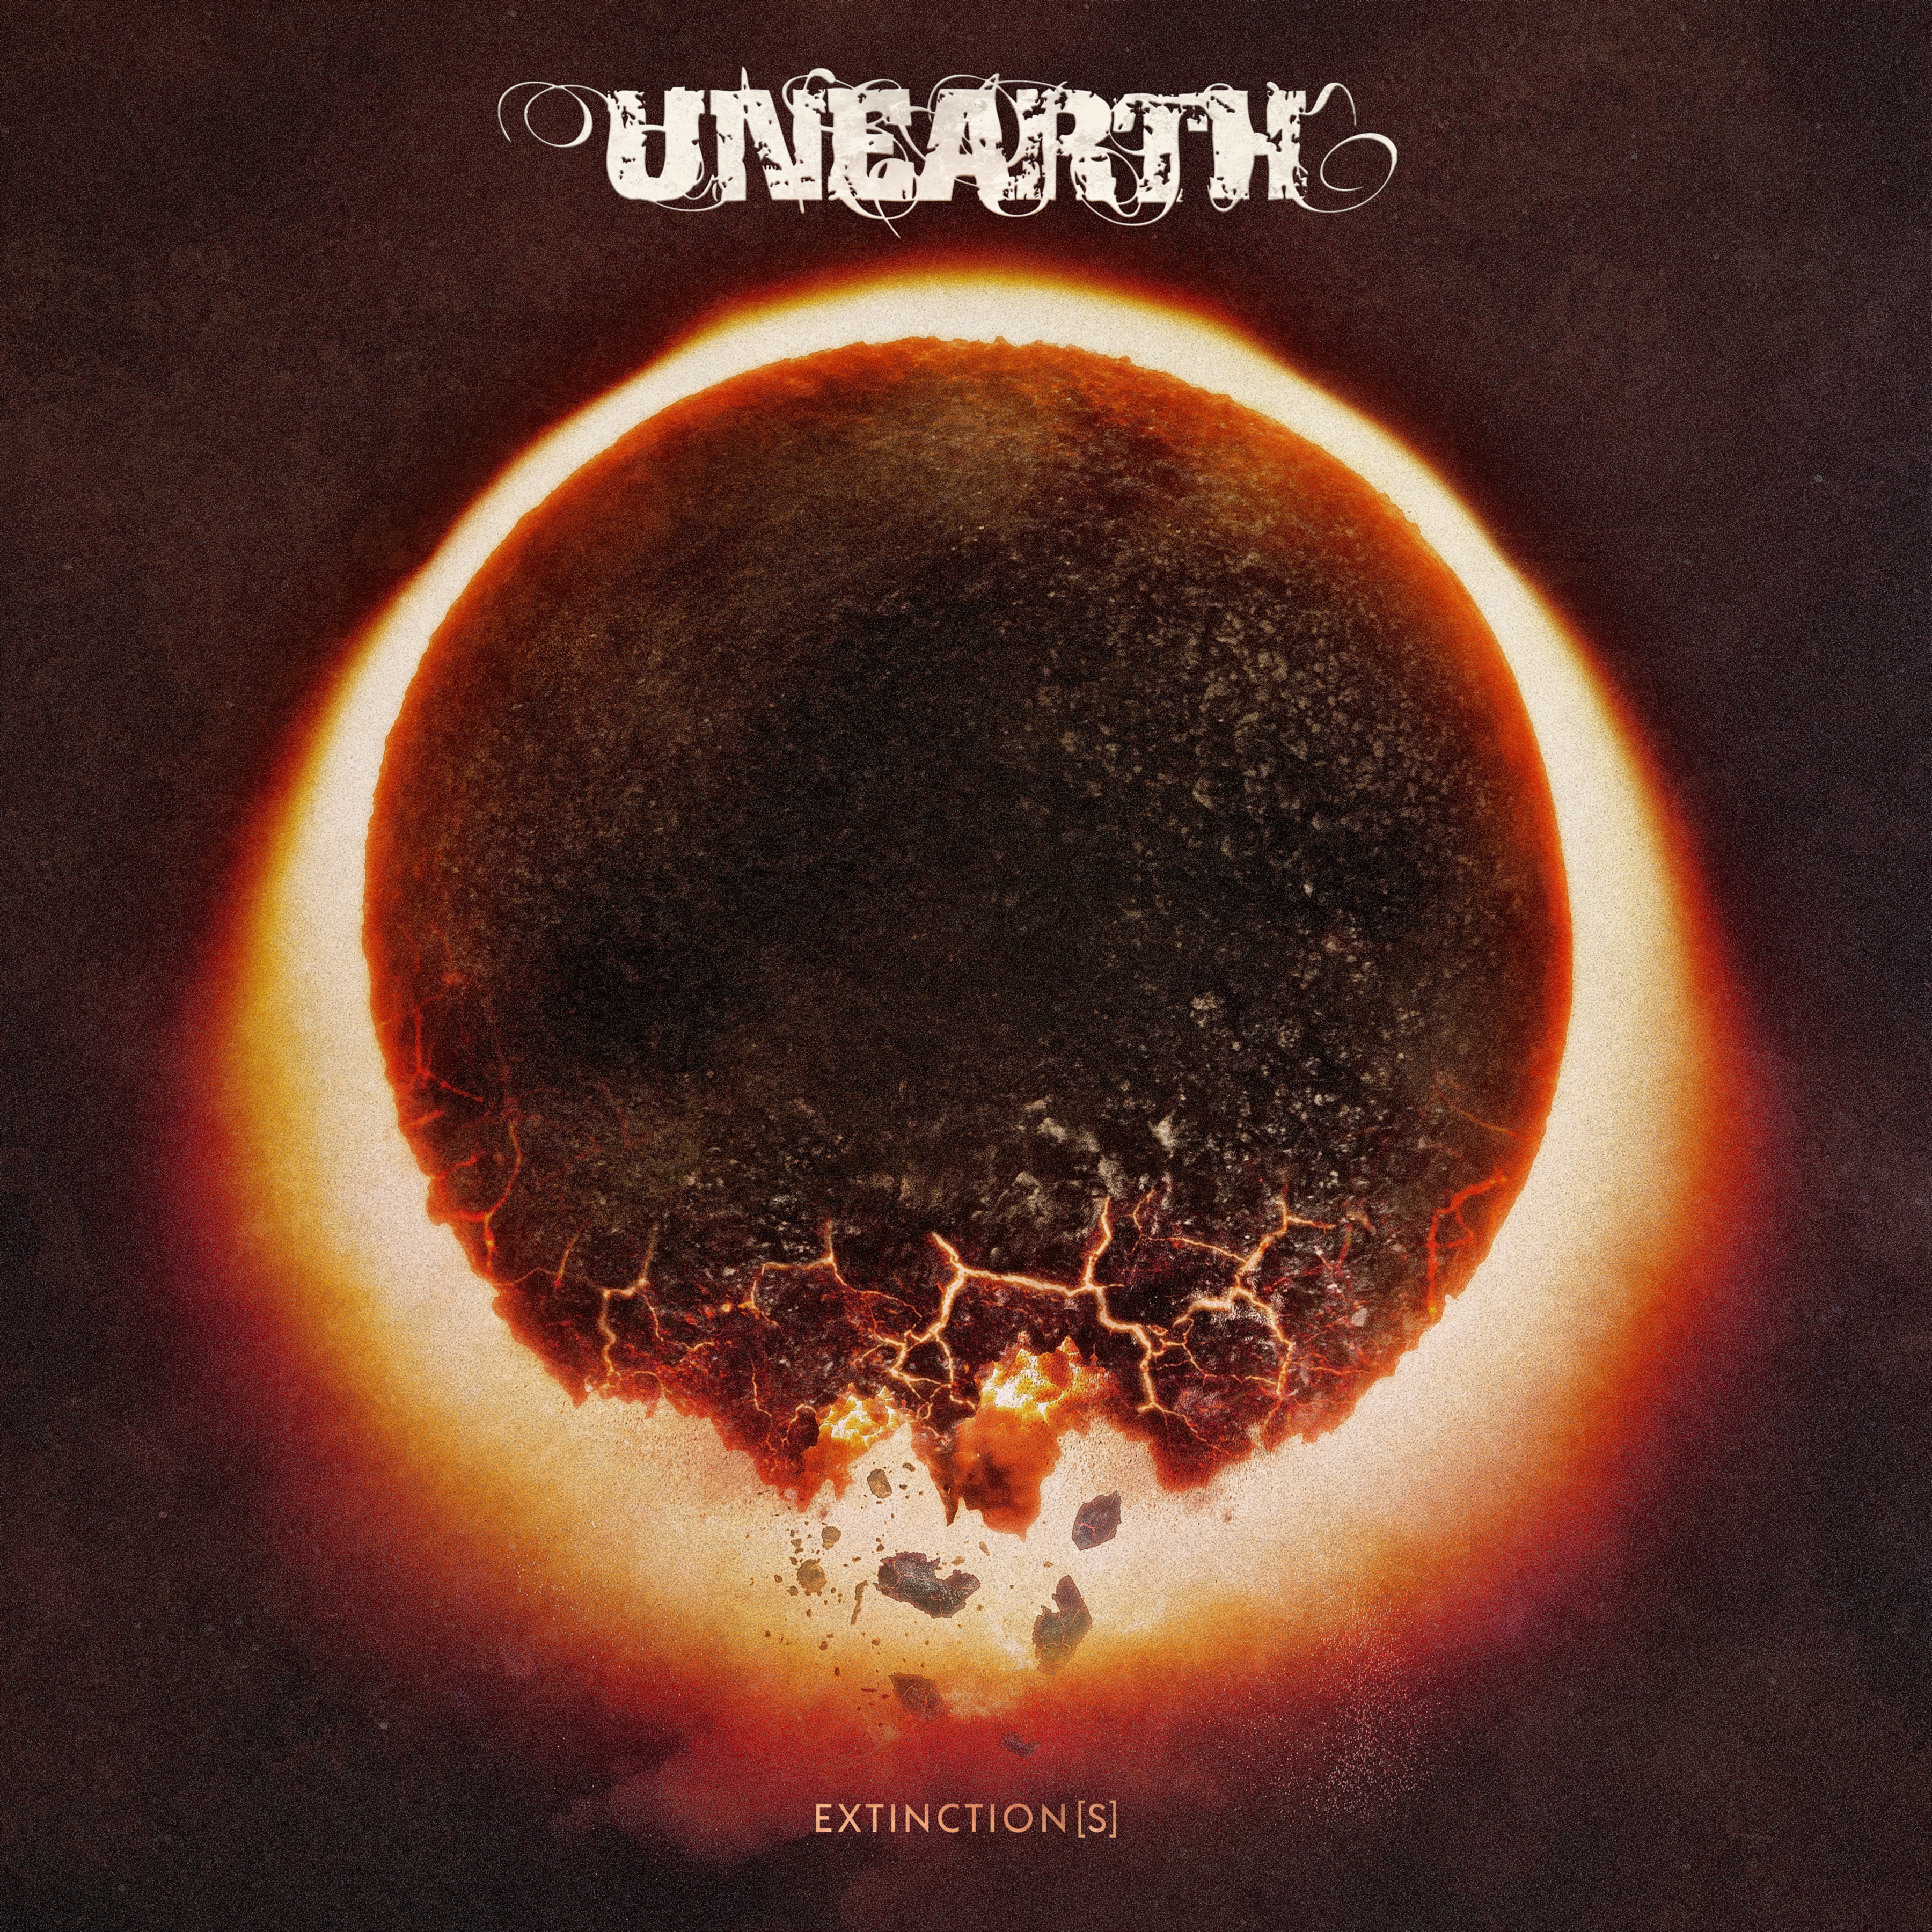 UNEARTH (USA) – Extinction(s)